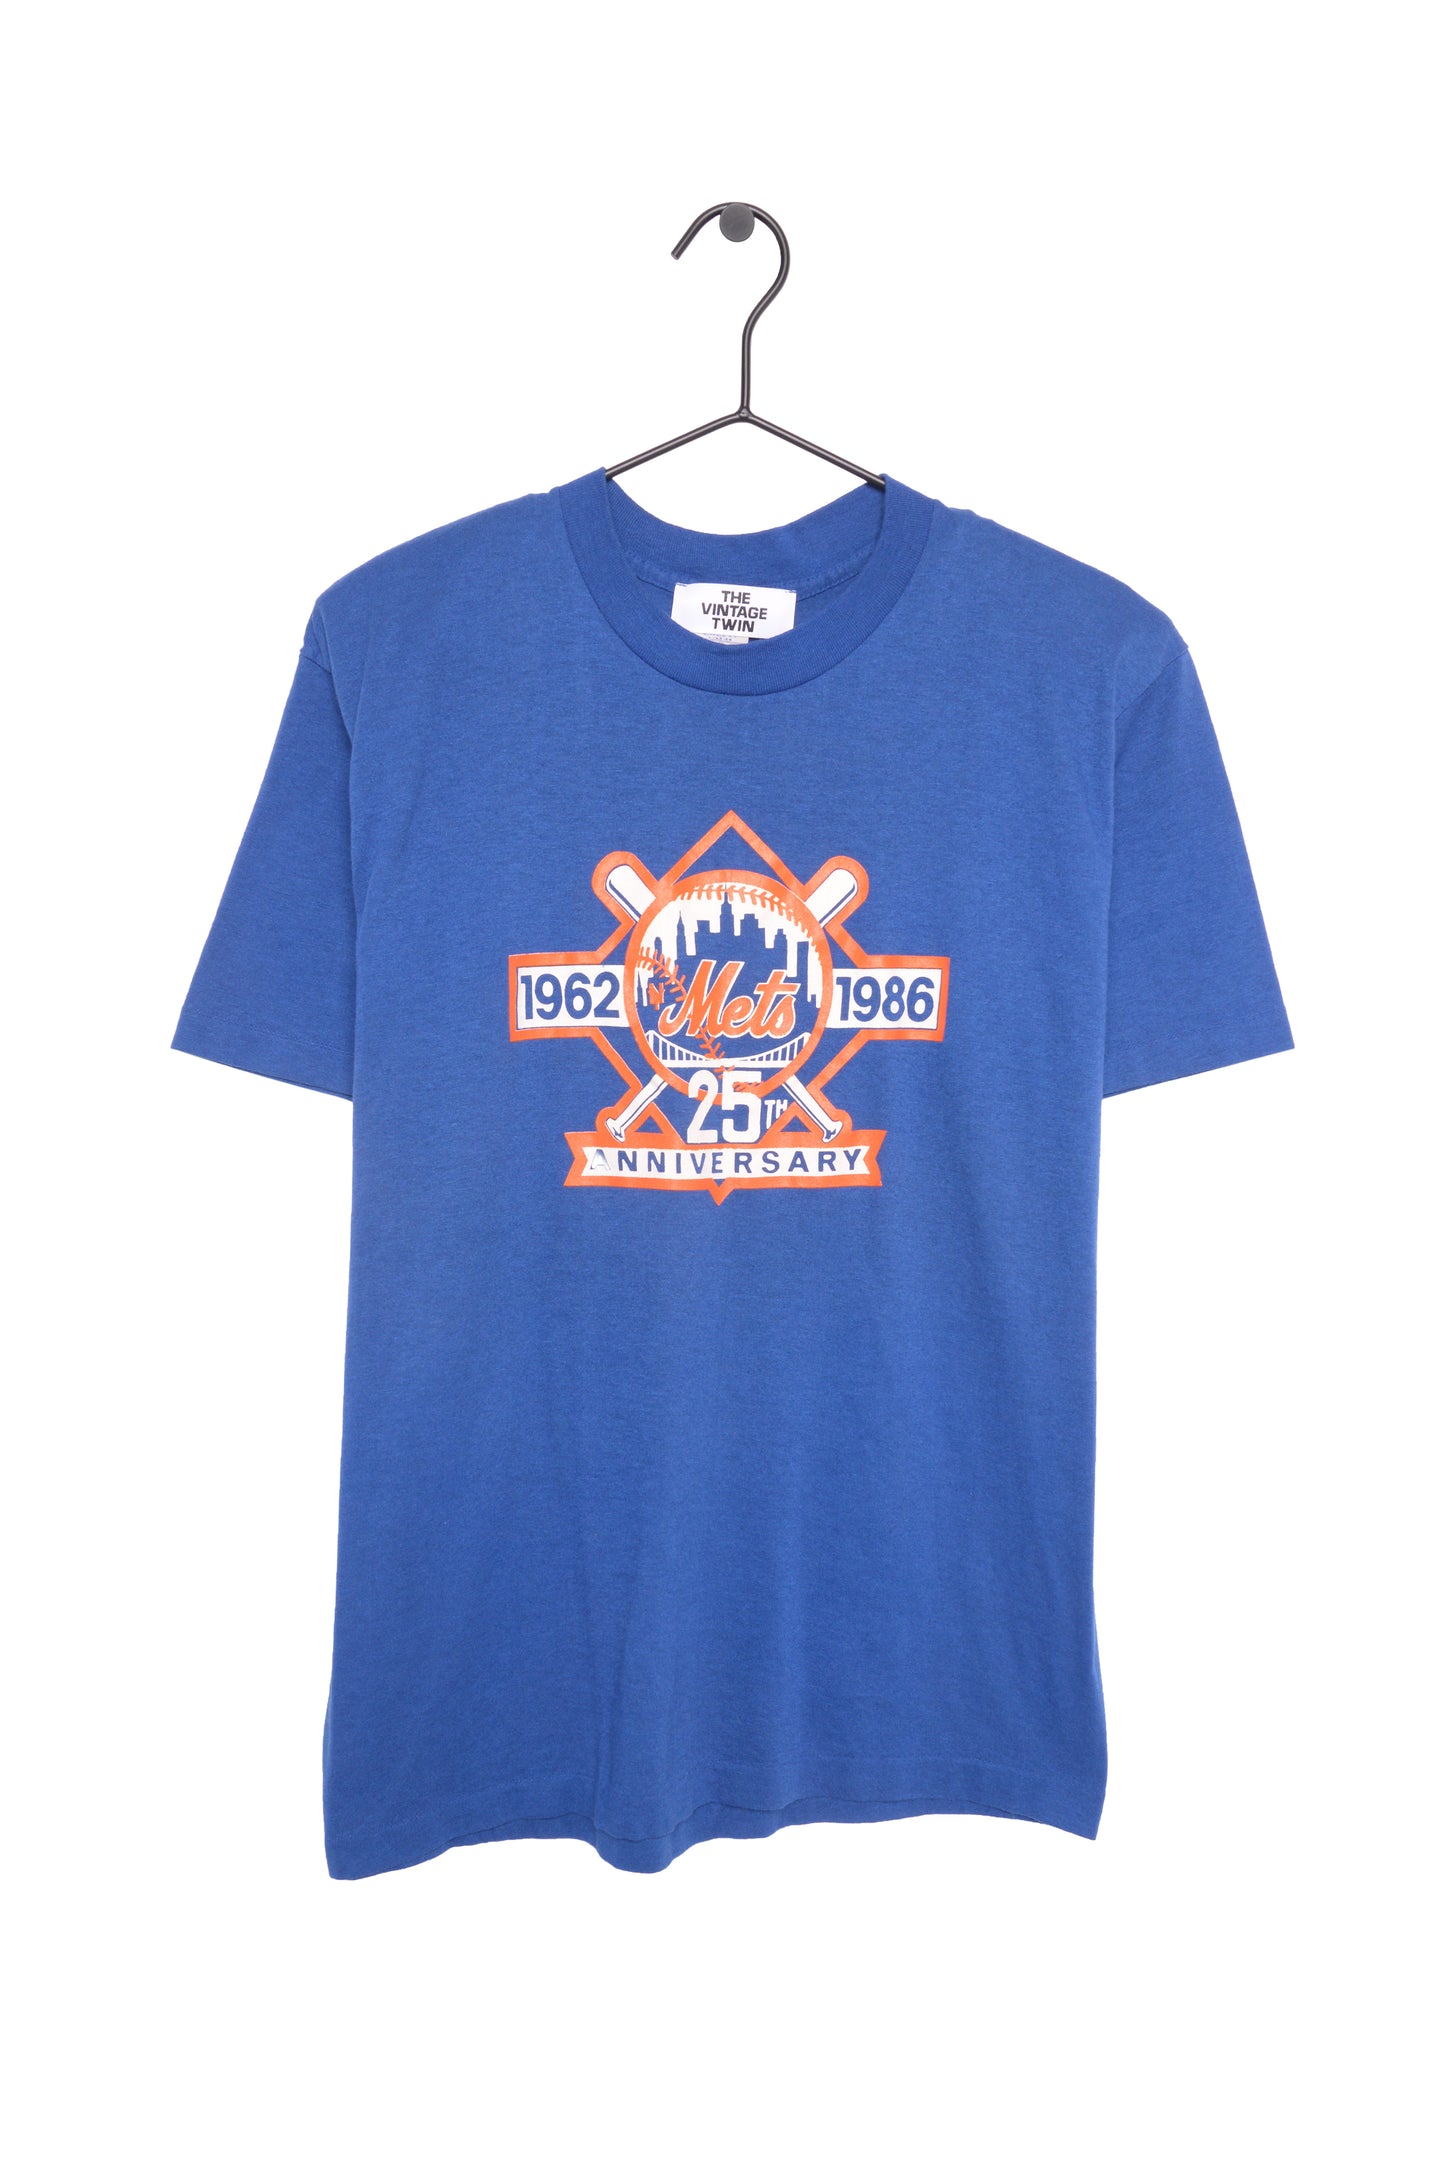 1986 New York Mets 25th Anniversary Tee USA